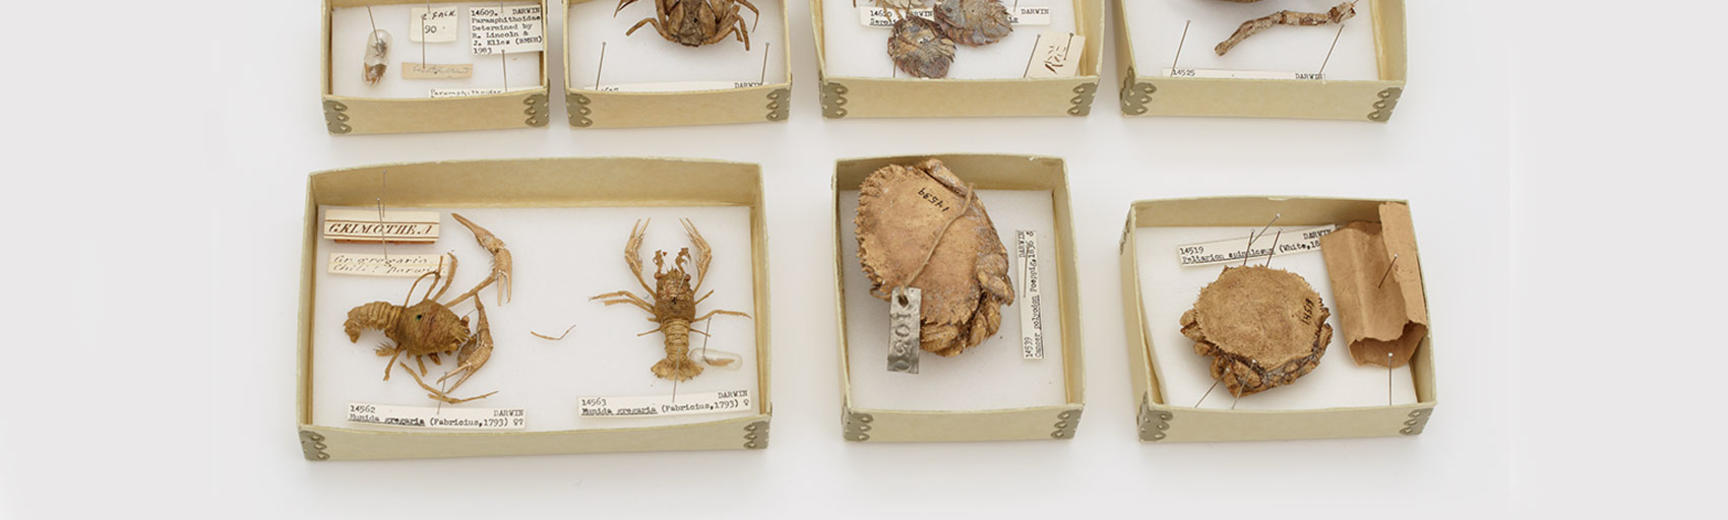 Crabs specimens